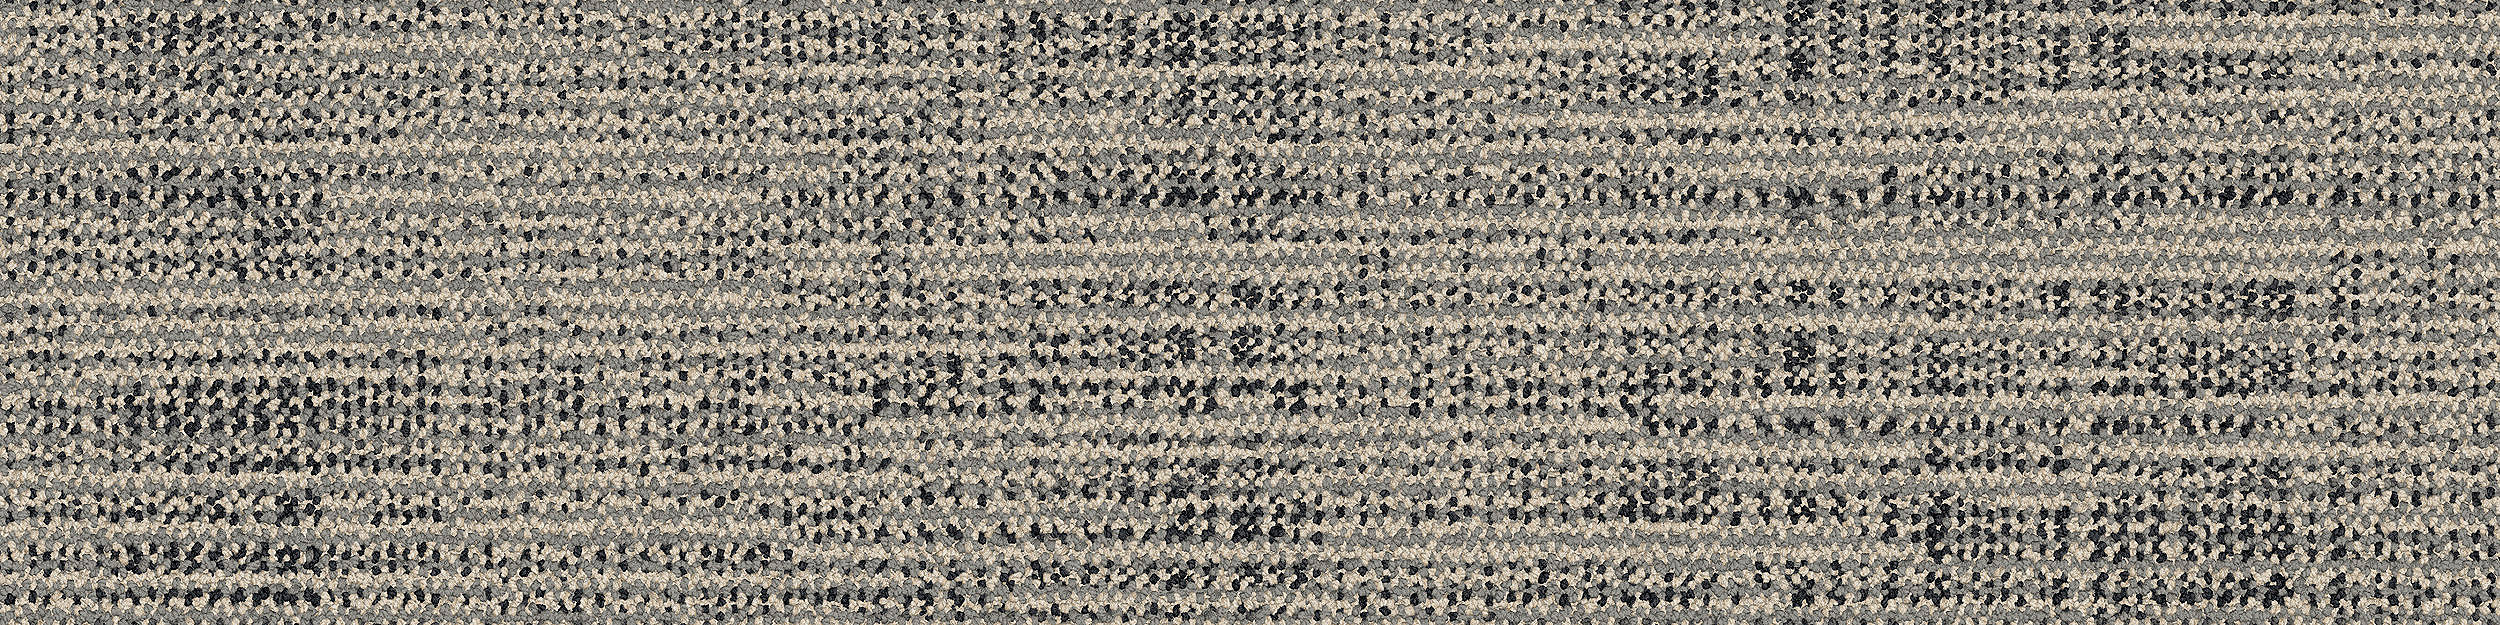 Screen Print Carpet Tile in Linen imagen número 6